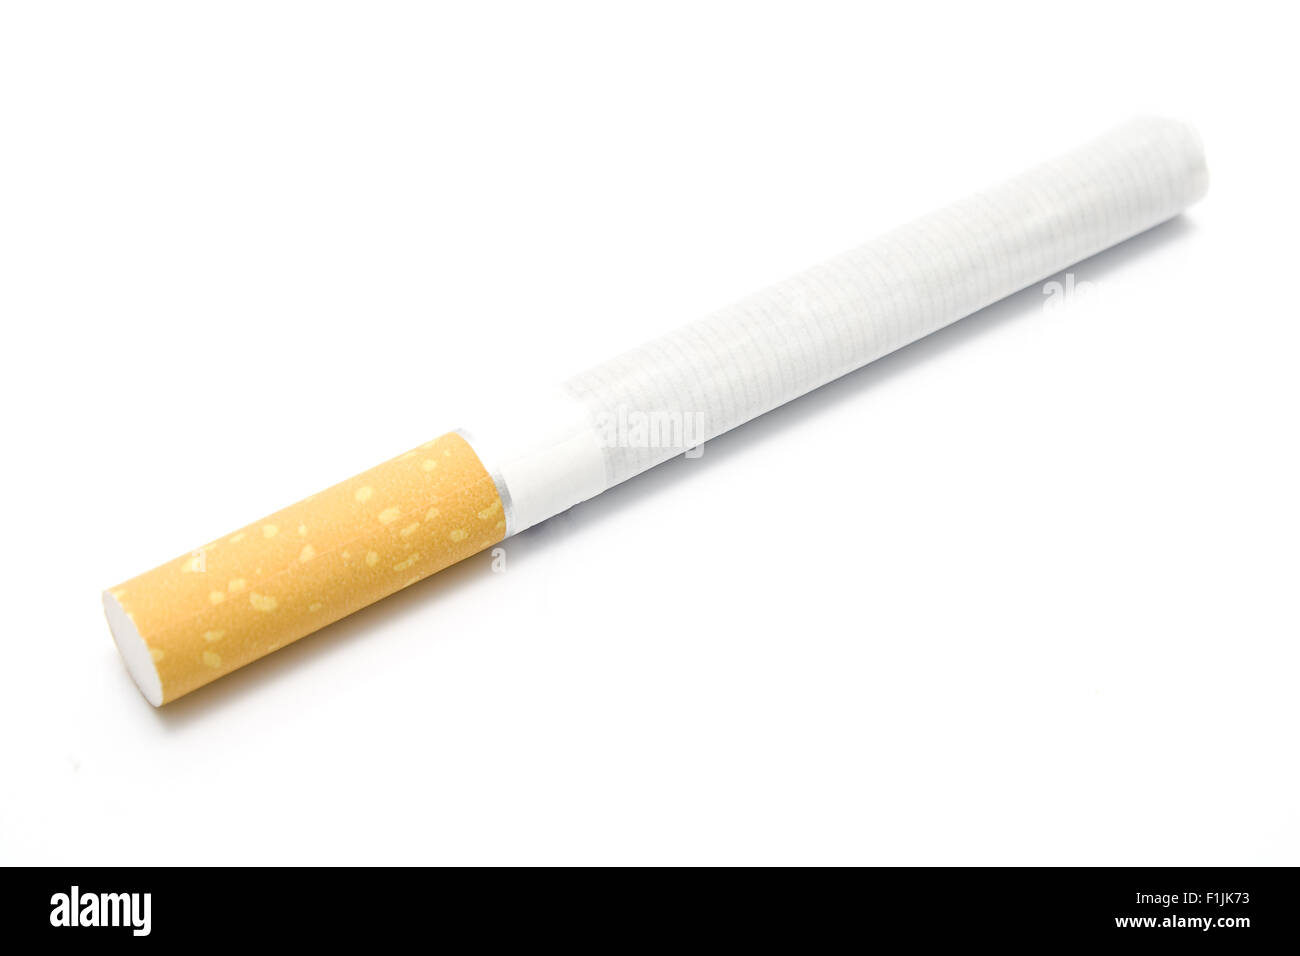 Single cigarette isolated on white Stock Photo